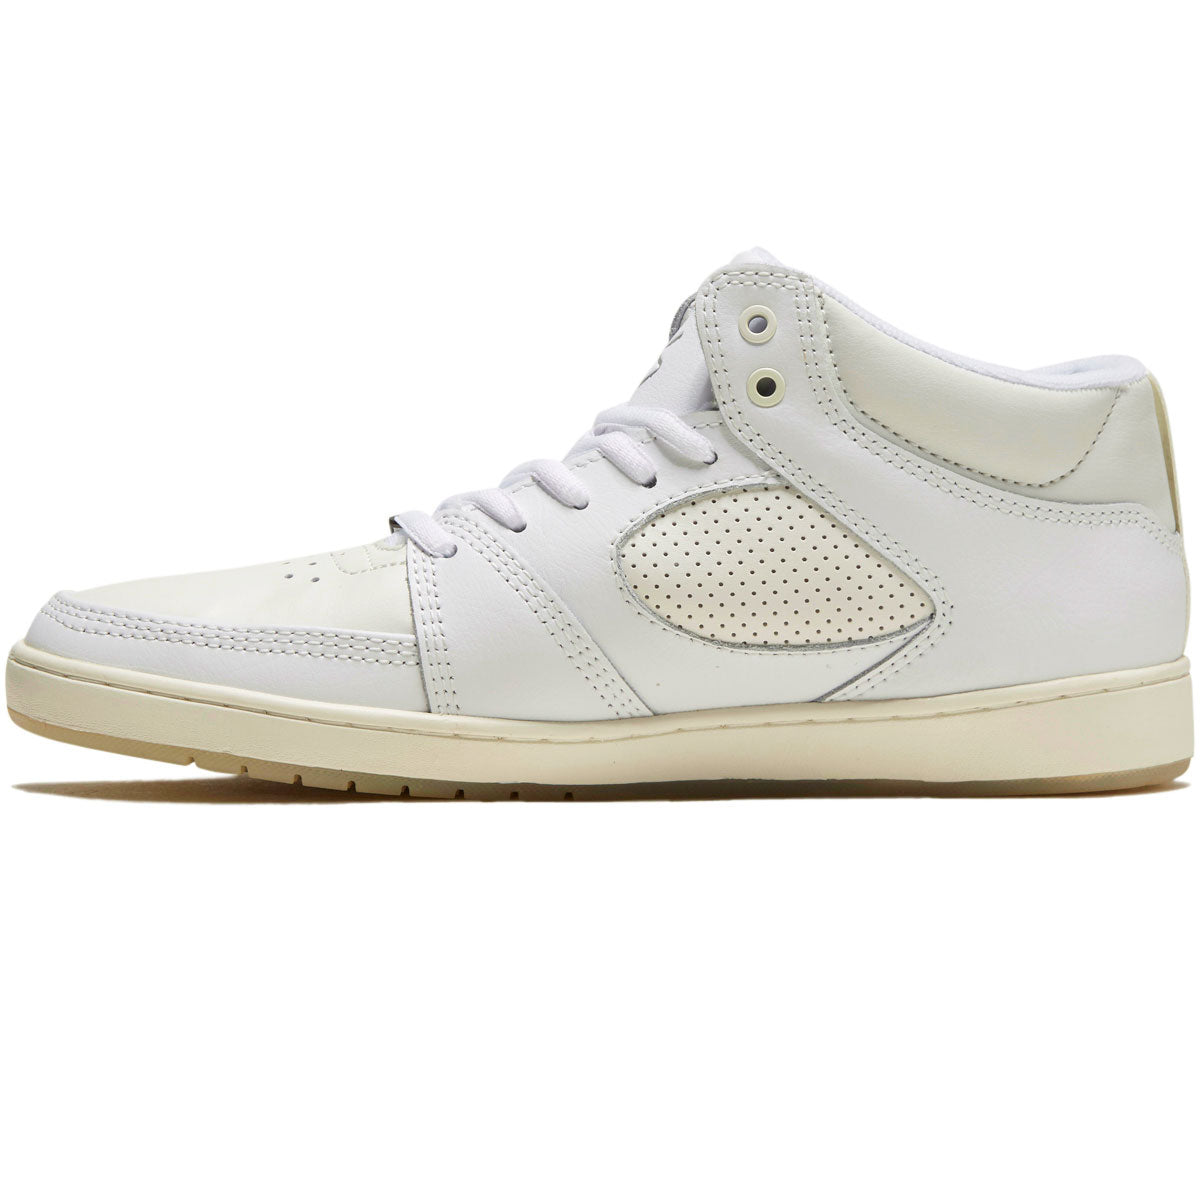 eS Accel Slim Mid Shoes - White/Light Grey image 2